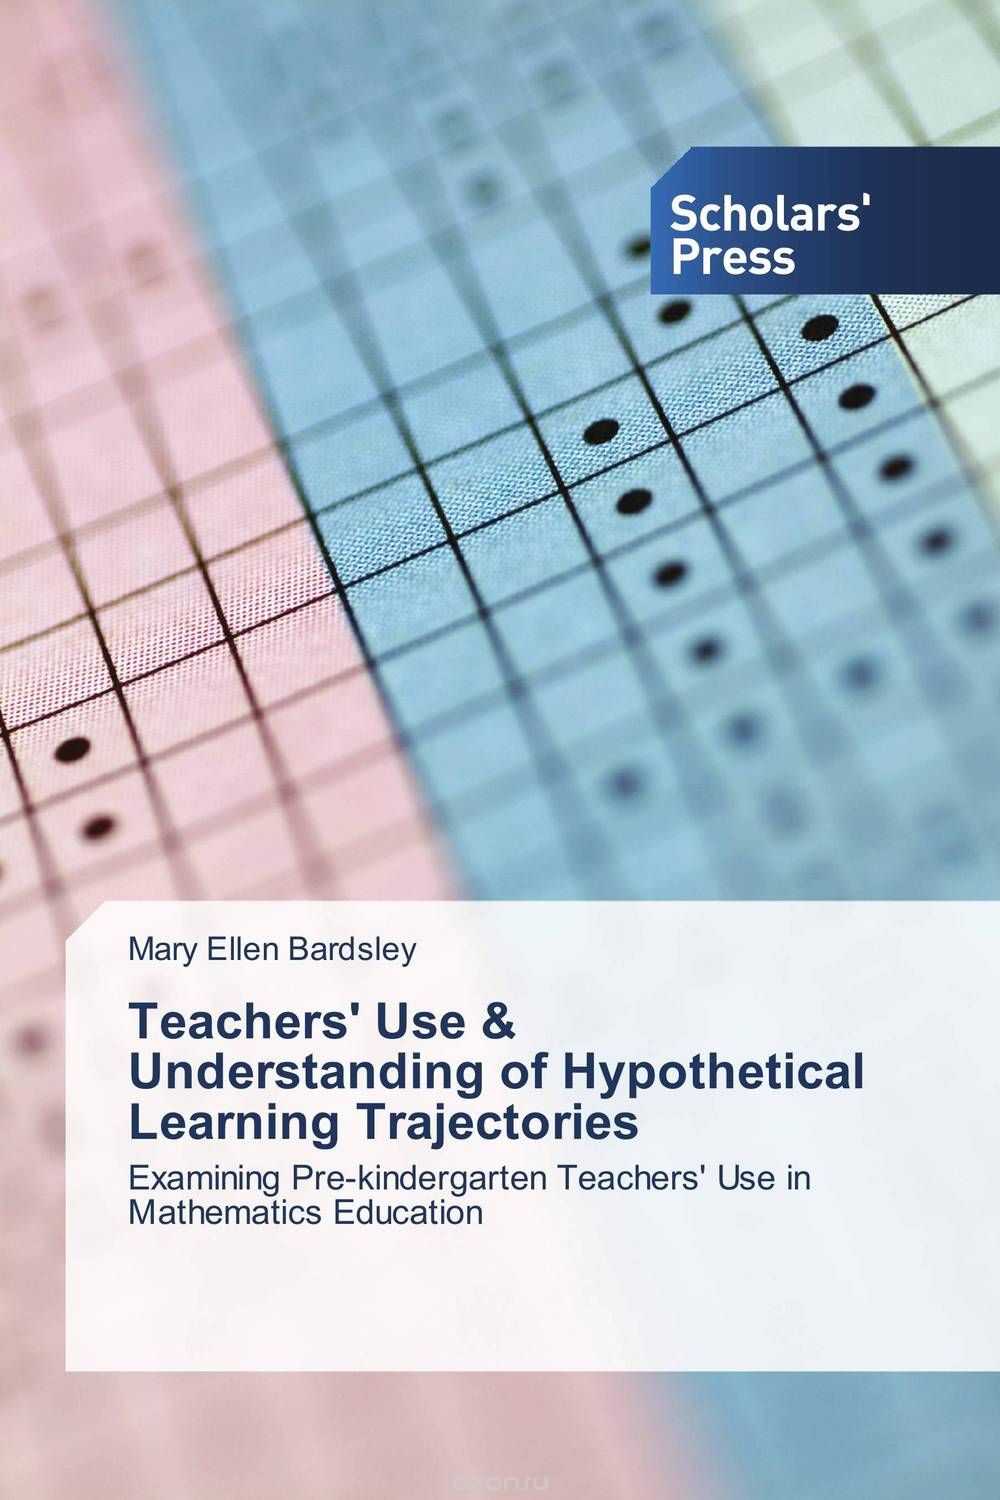 Скачать книгу "Teachers' Use & Understanding of Hypothetical Learning Trajectories"